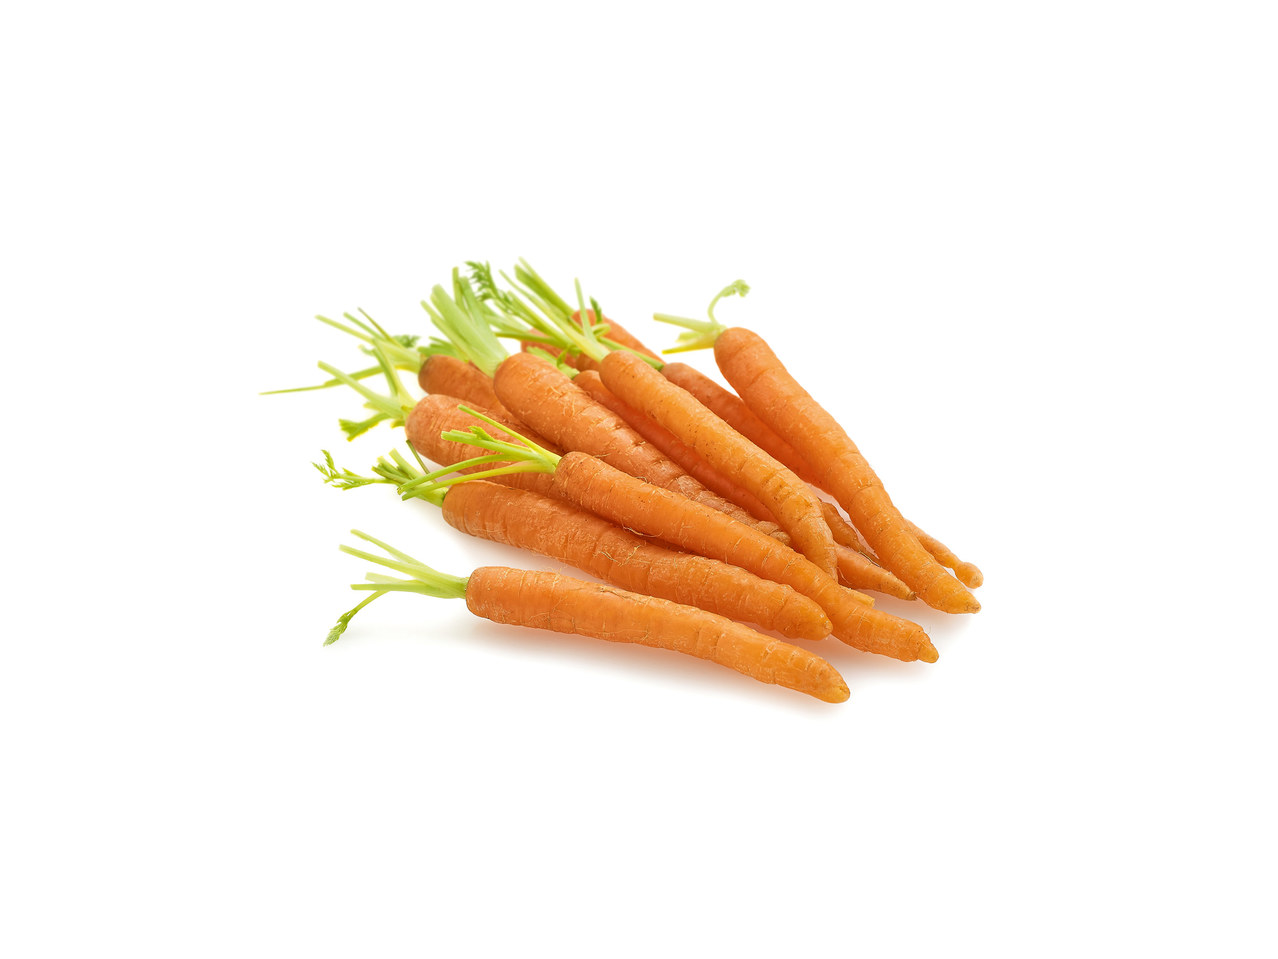 Mini-carottes